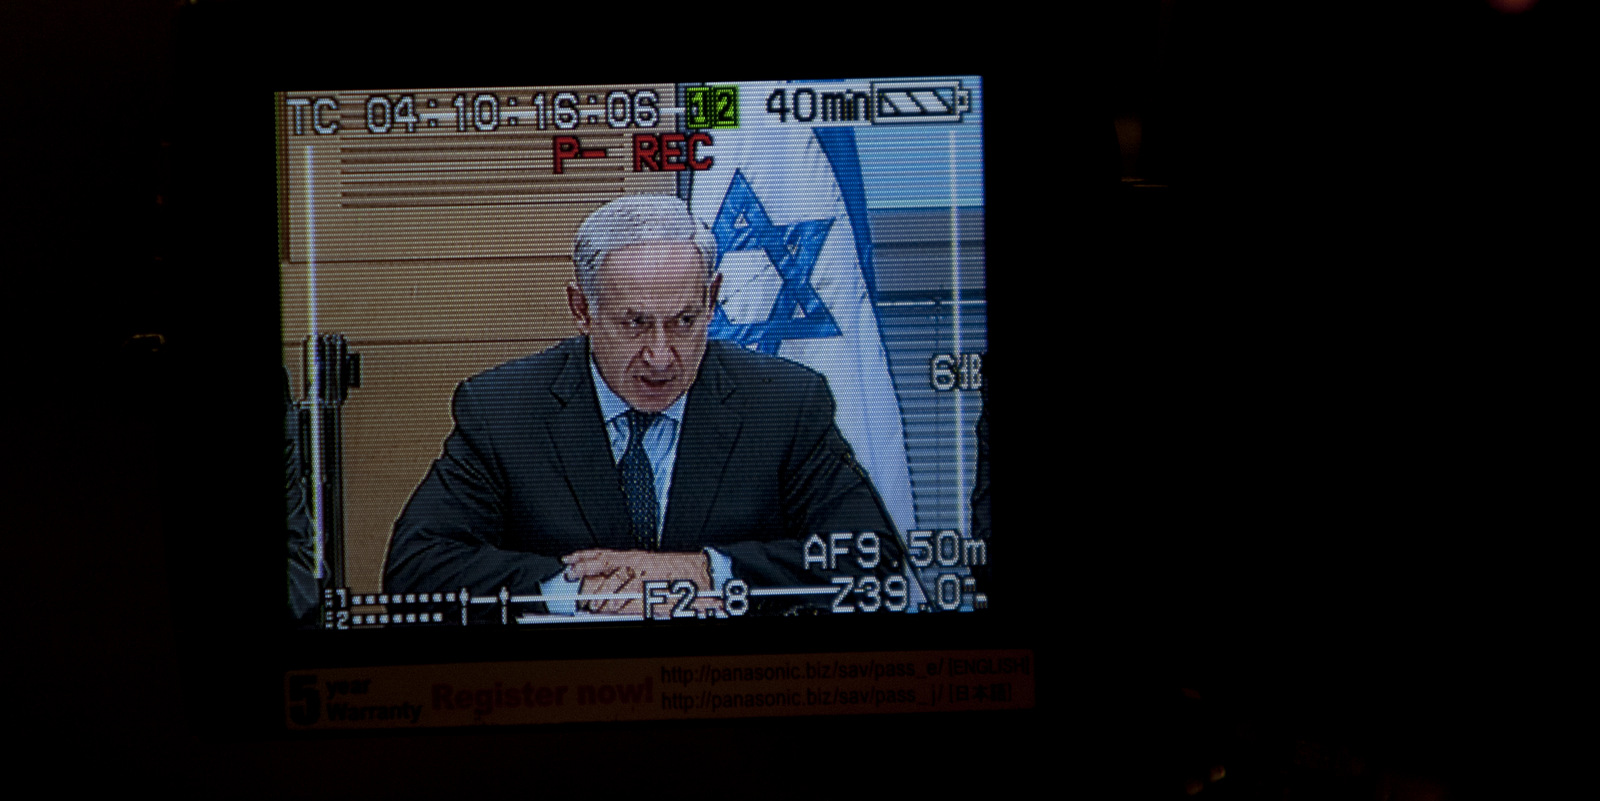 Israeli Prime Minister Benjamin Netanyahu is seen through the view-finder of a video camera. (AP/Se bastian Scheiner)